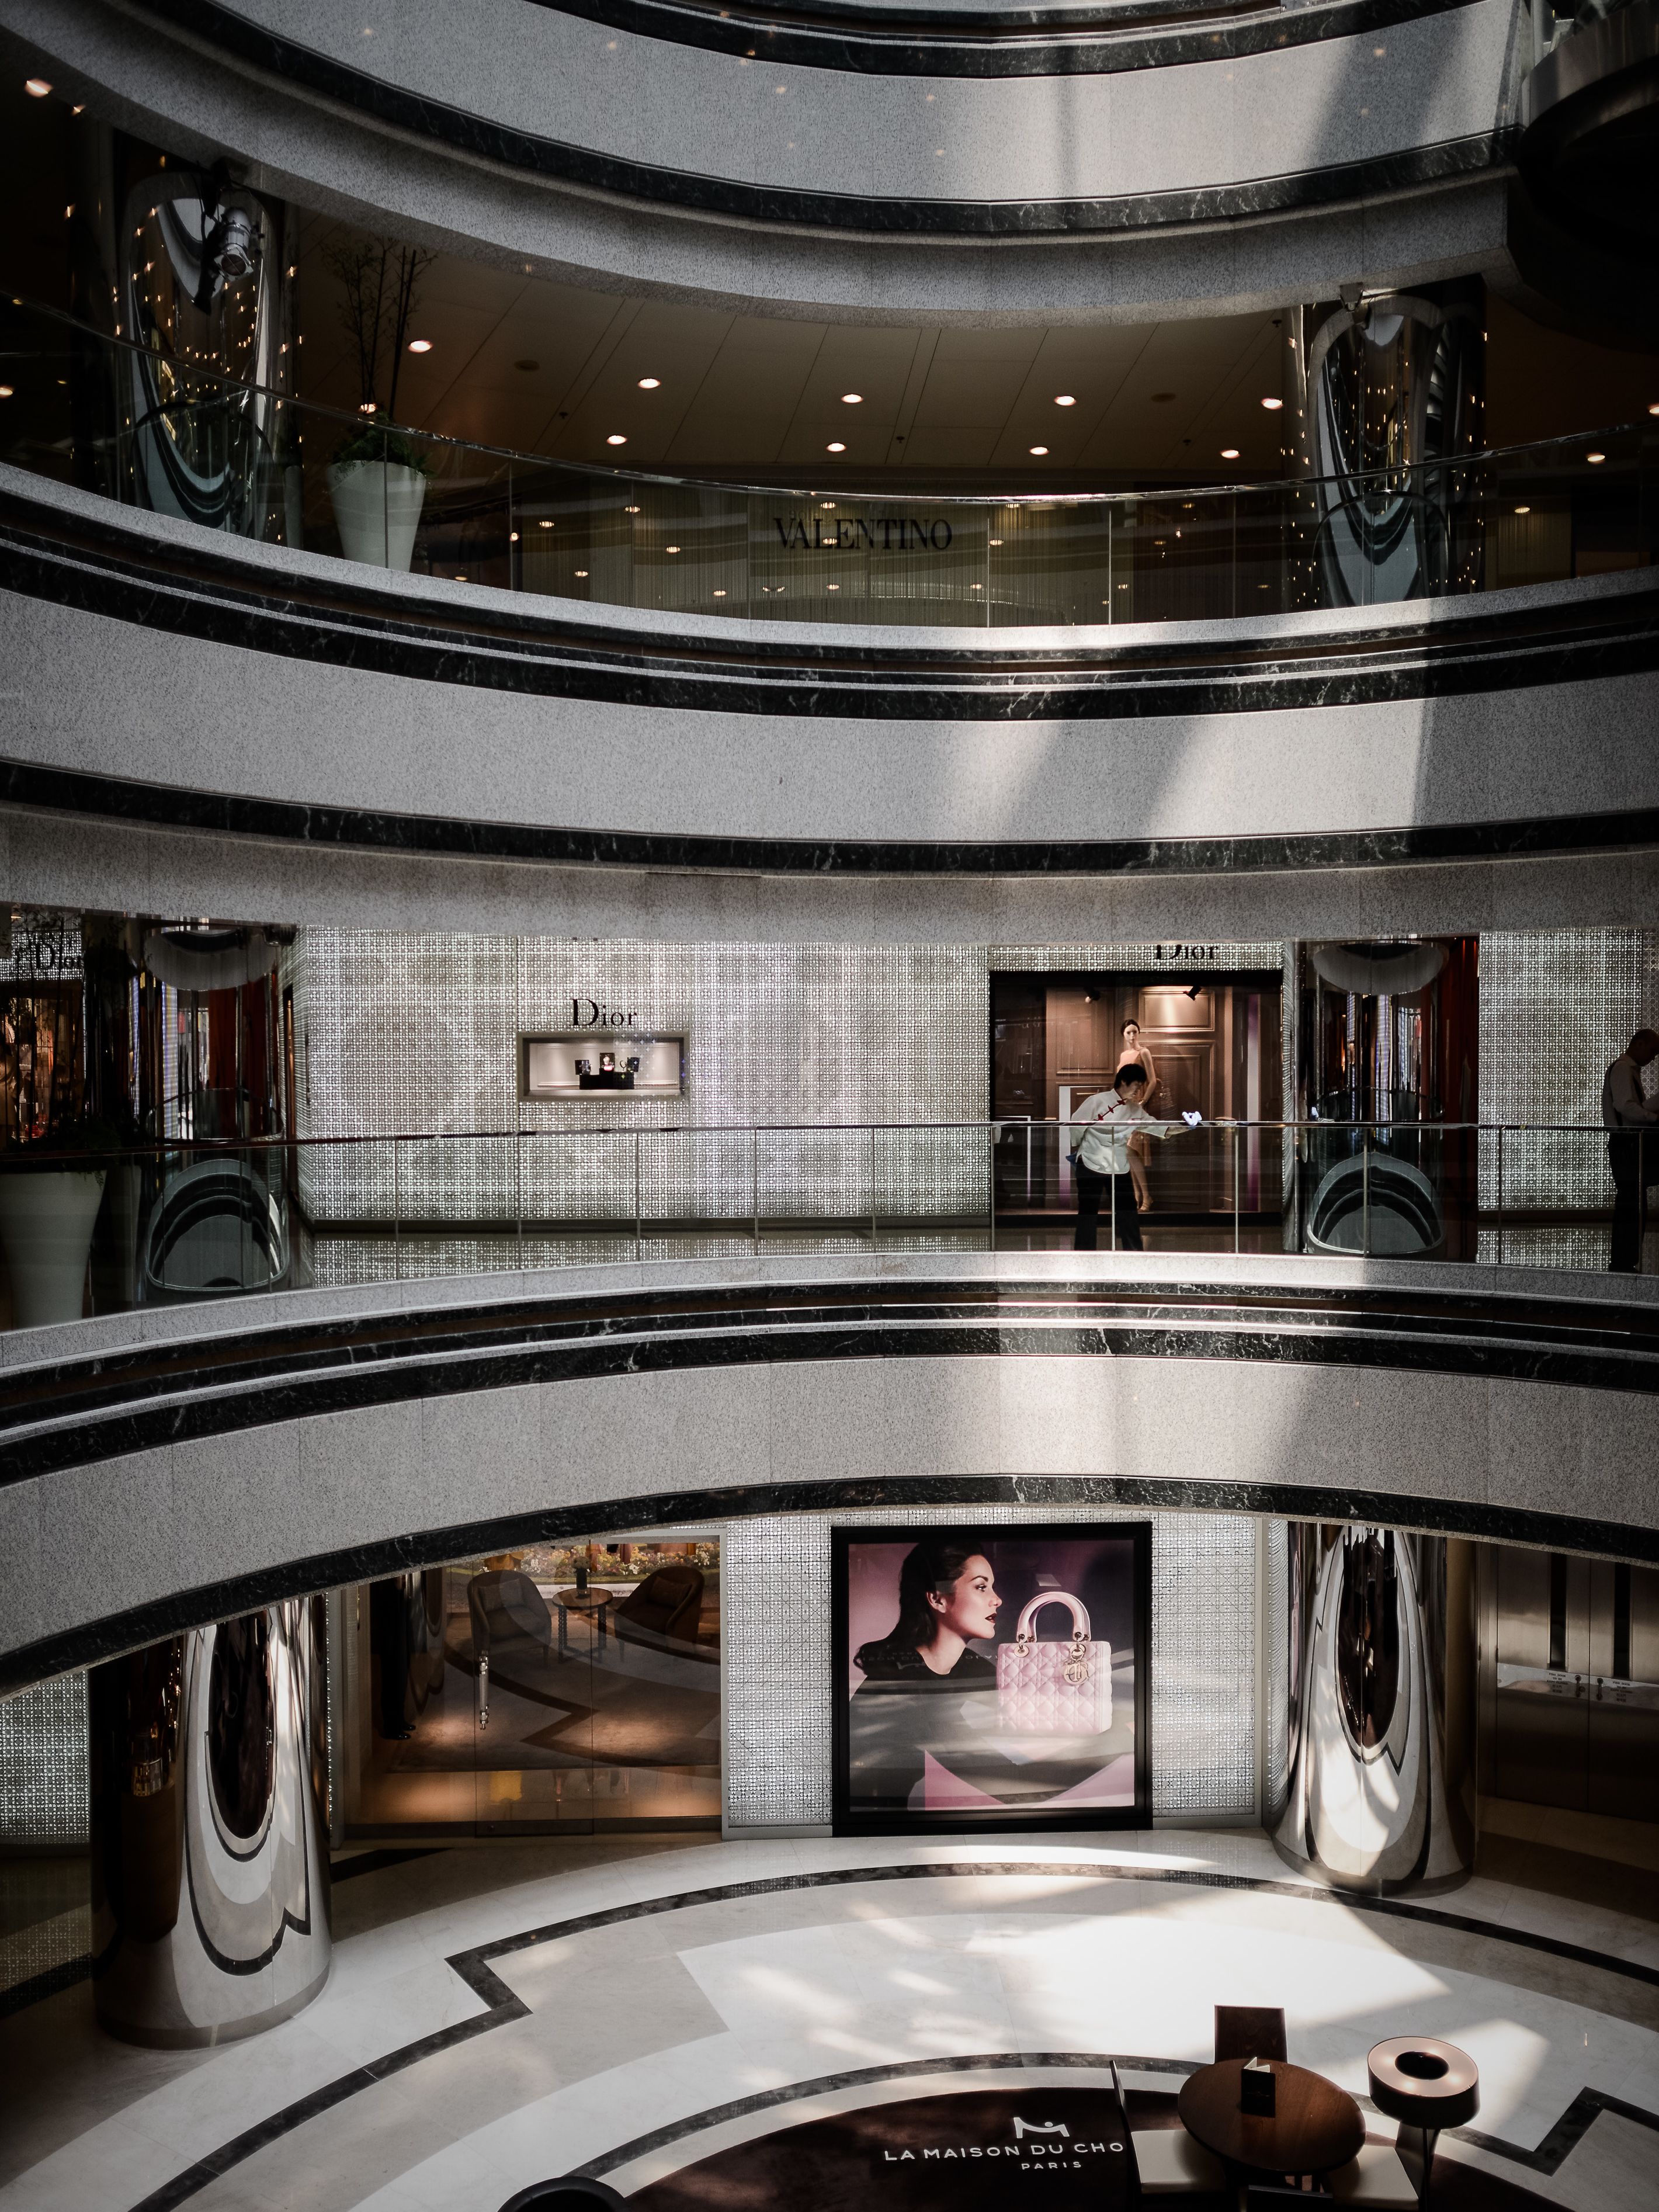 Hong Kong became a 'city of malls' | CNN